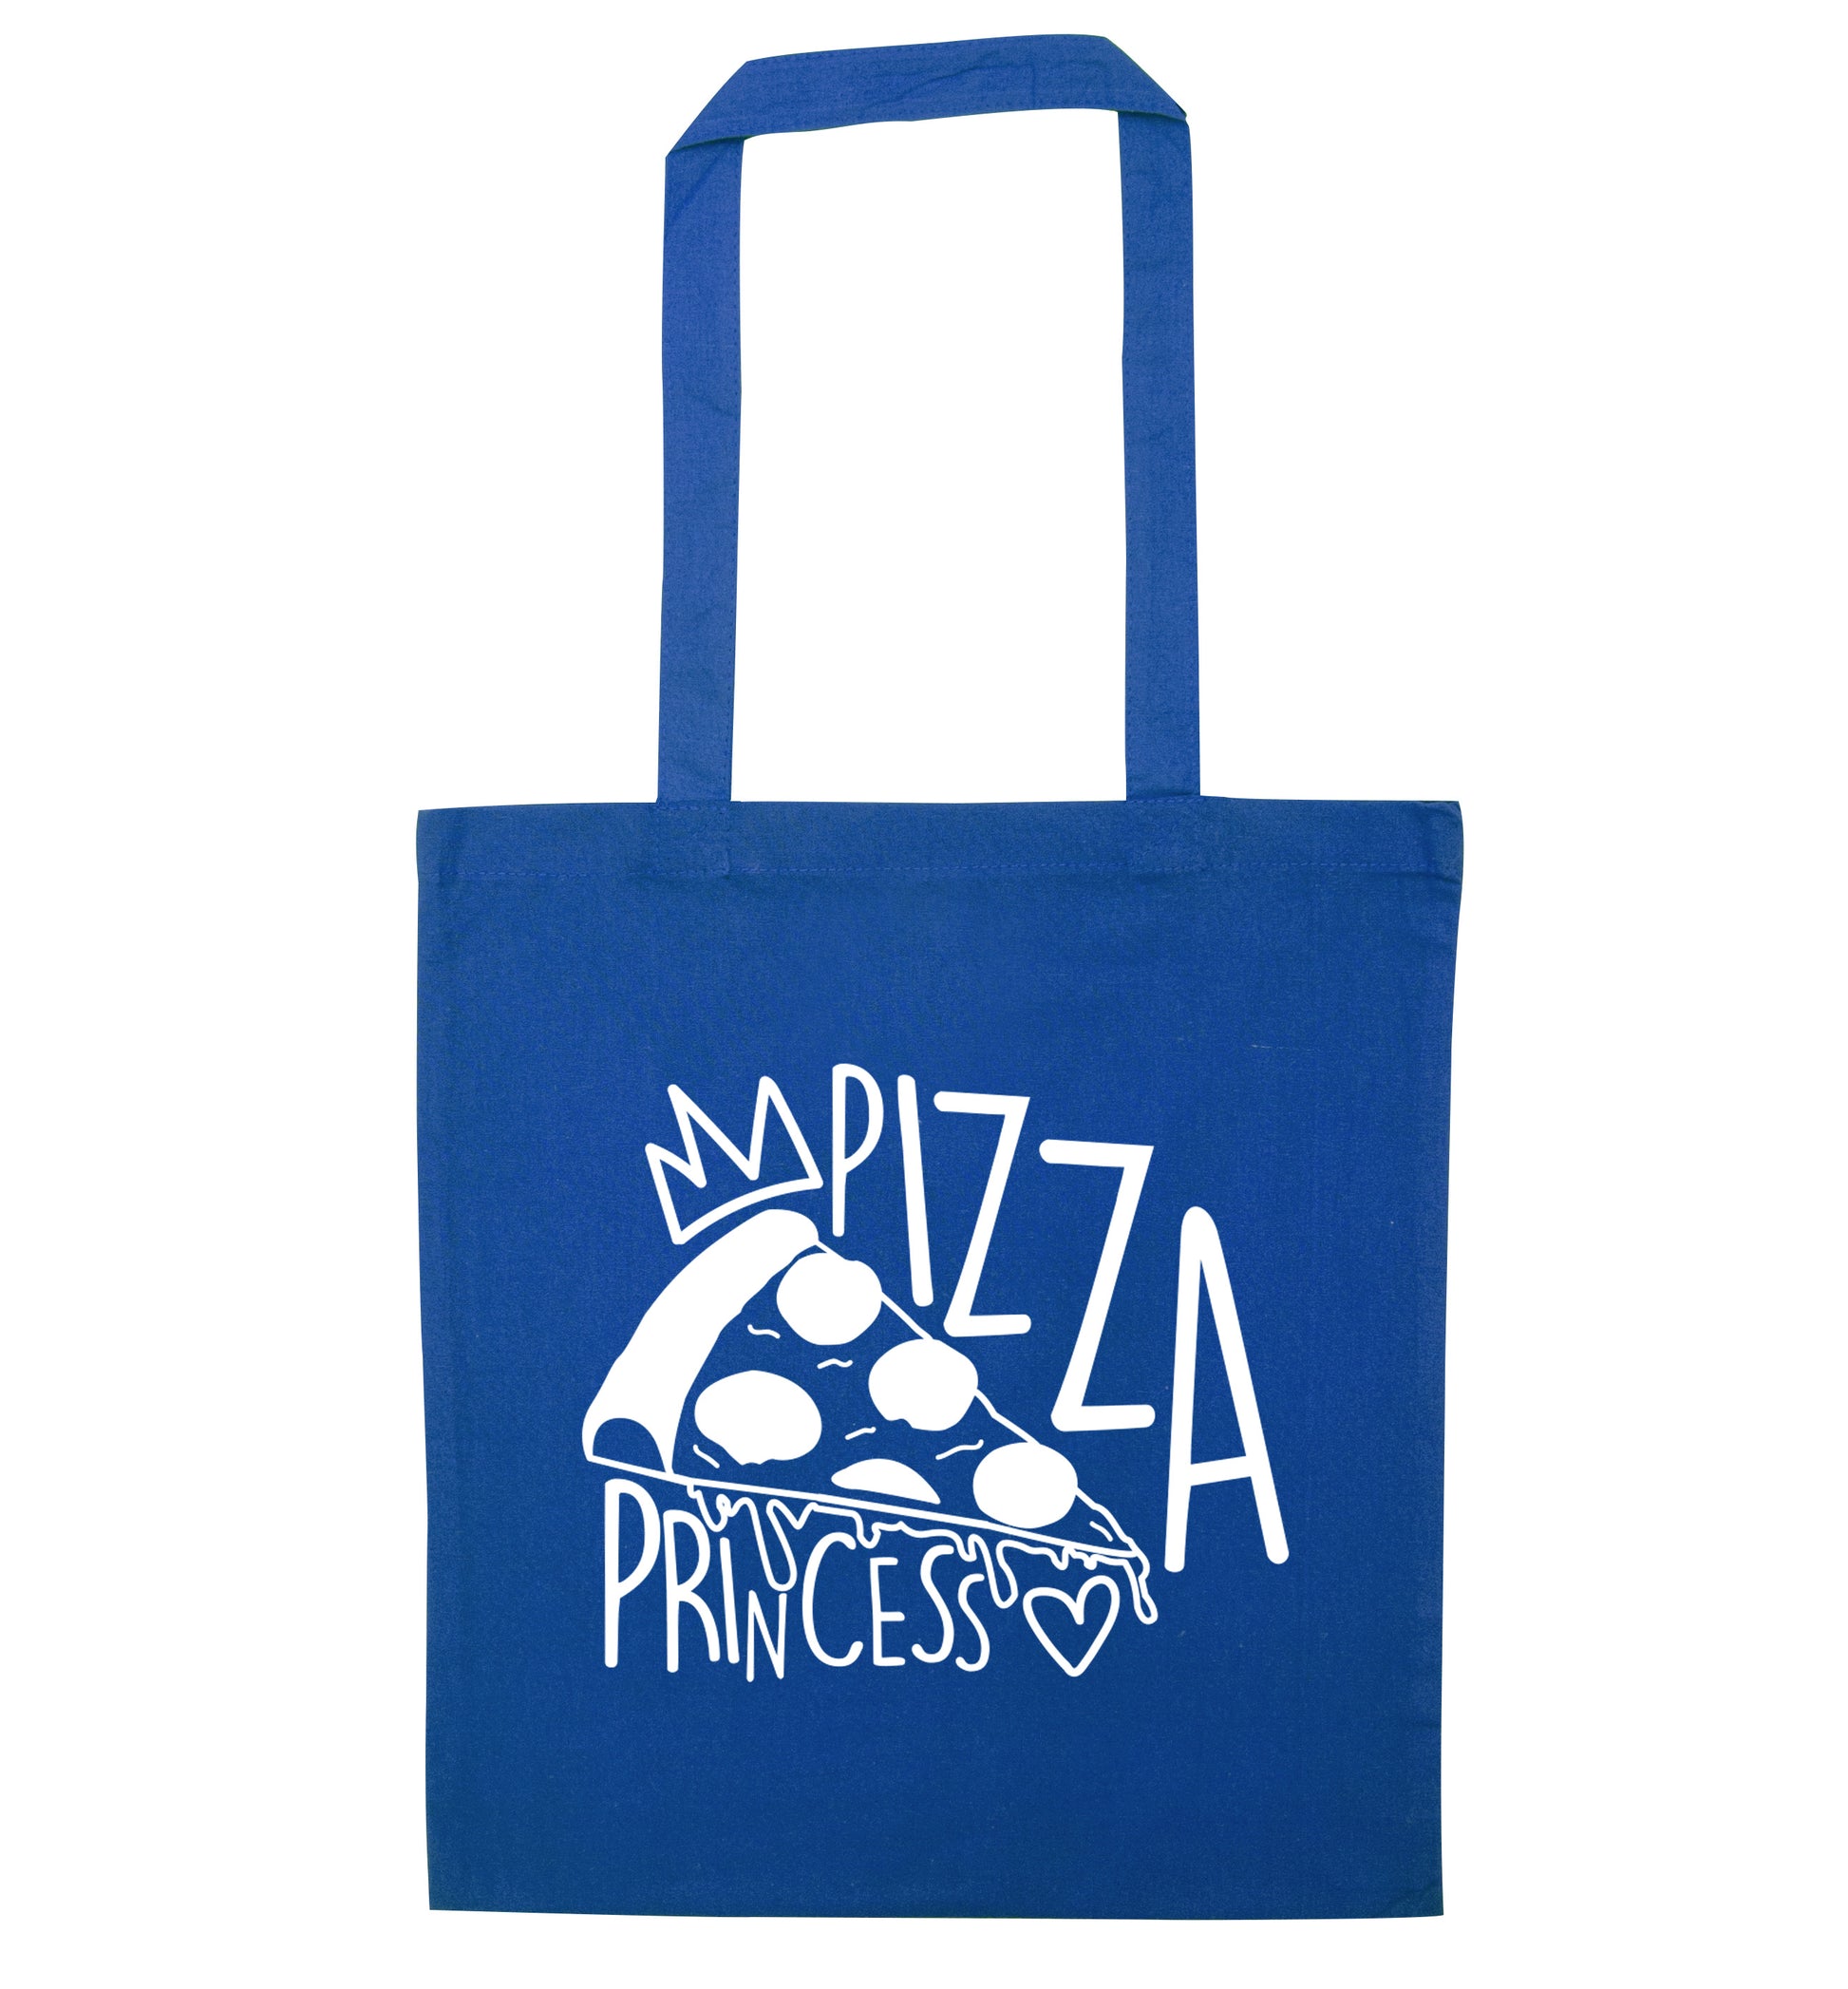 Pizza Princess blue tote bag